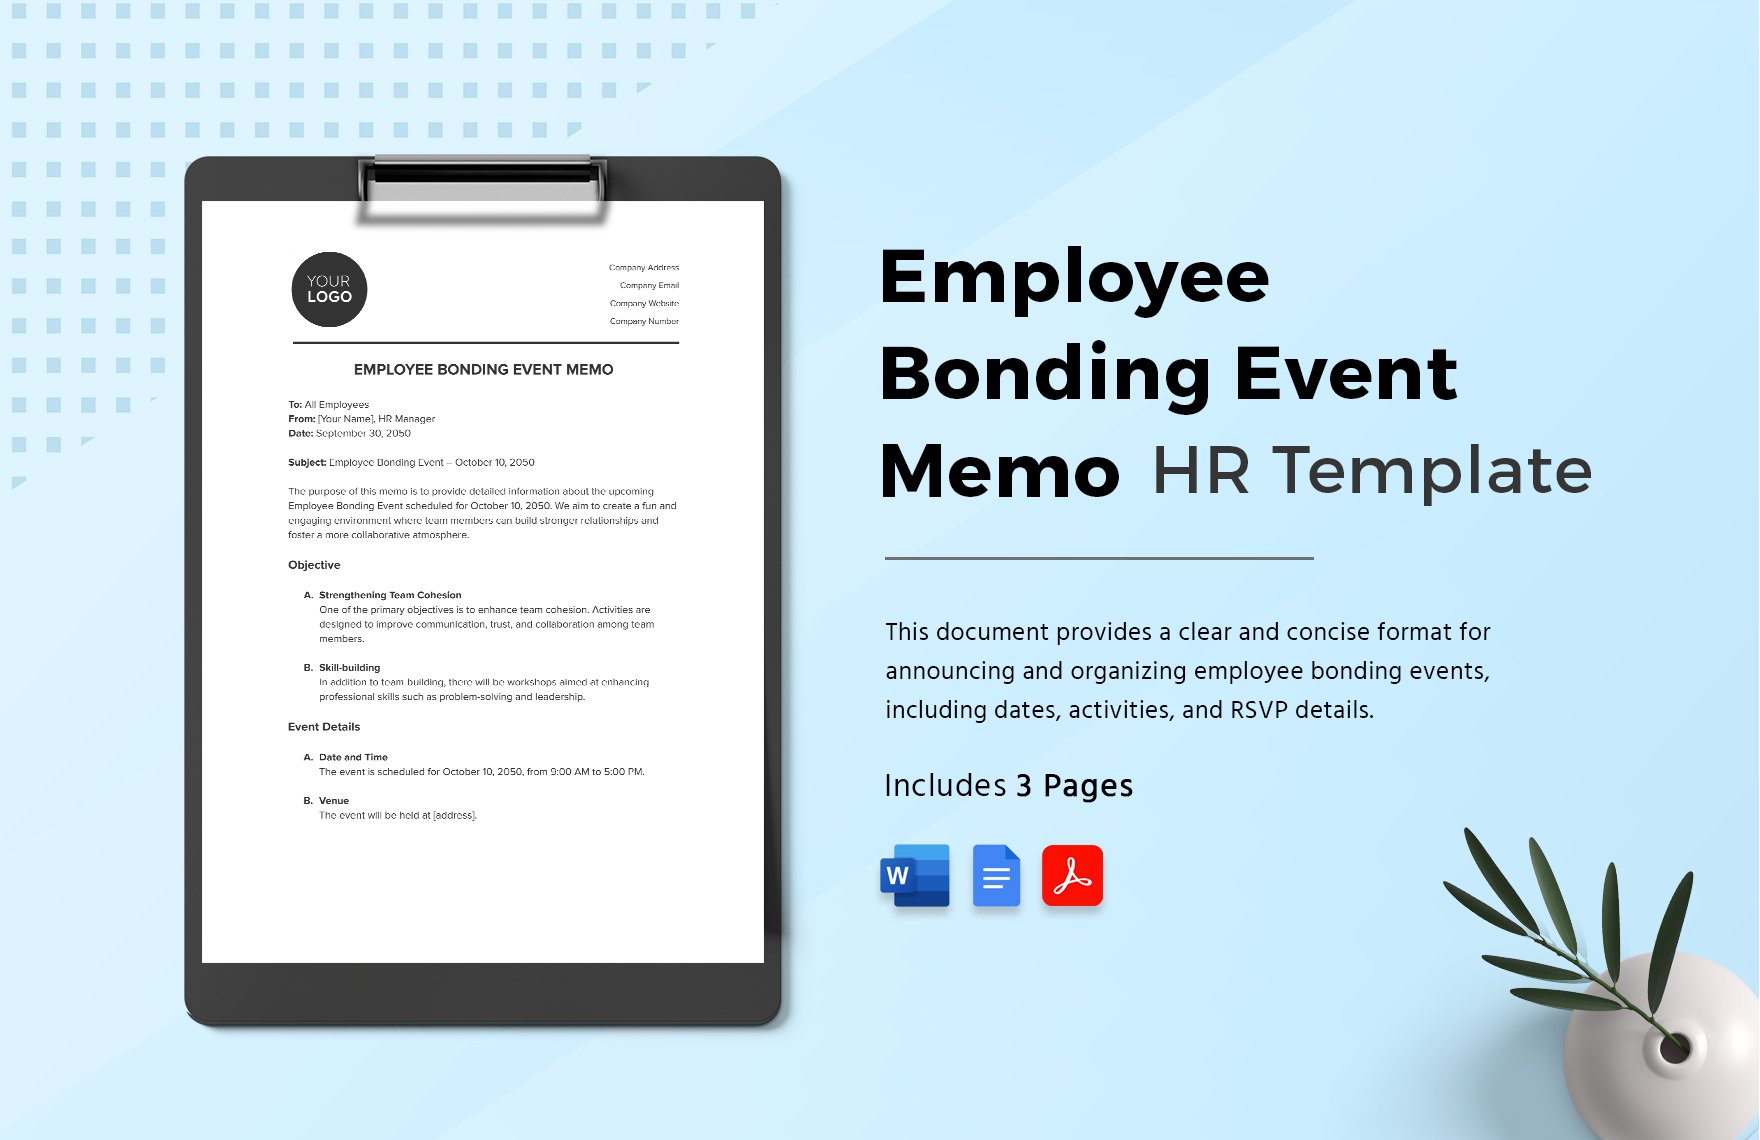 Employee Bonding Event Memo HR Template